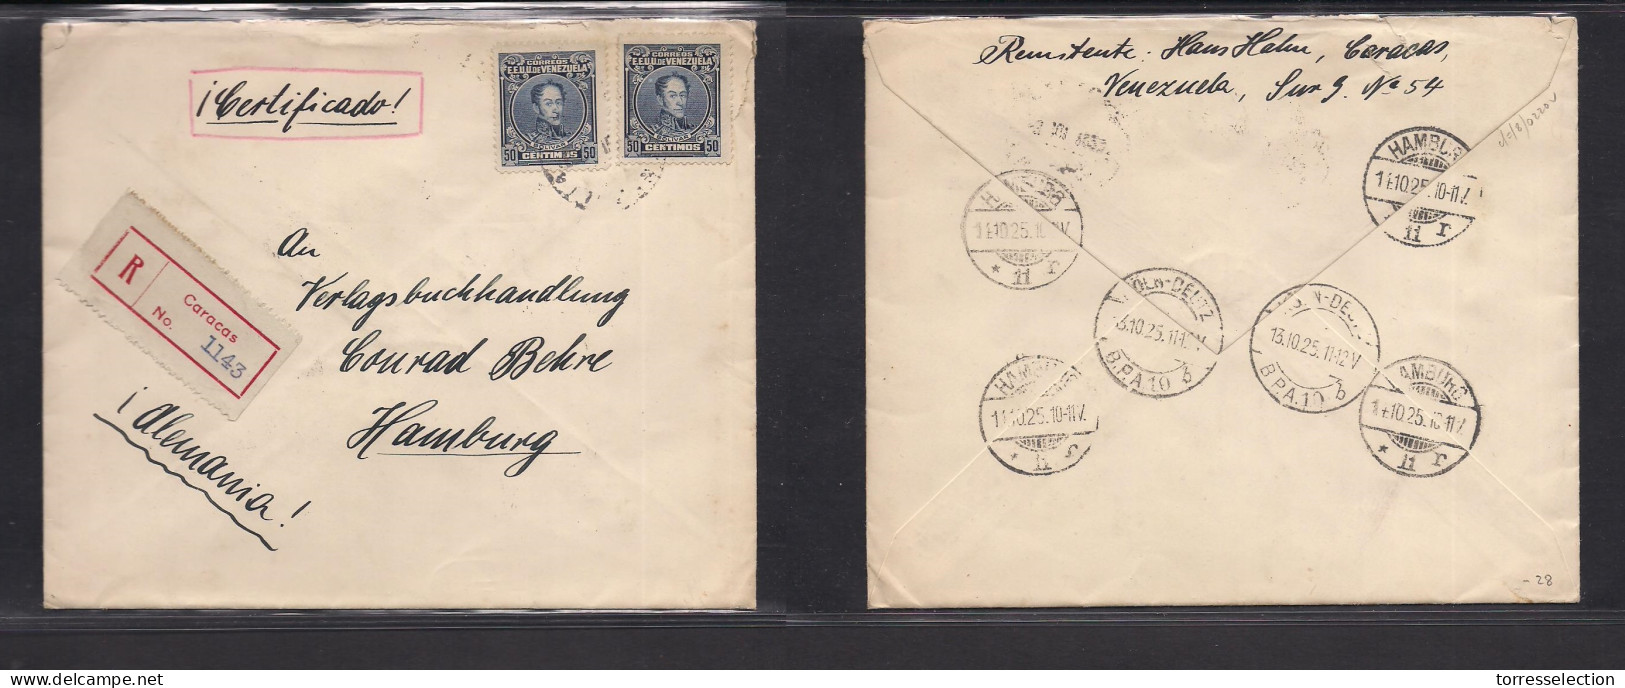 VENEZUELA. 1925 (Sept) Caracas - Germany, Hamburg (3 Oct) Registered Multifkd Env 1 Peso Rate + R-label. Fine. XSALE. - Venezuela